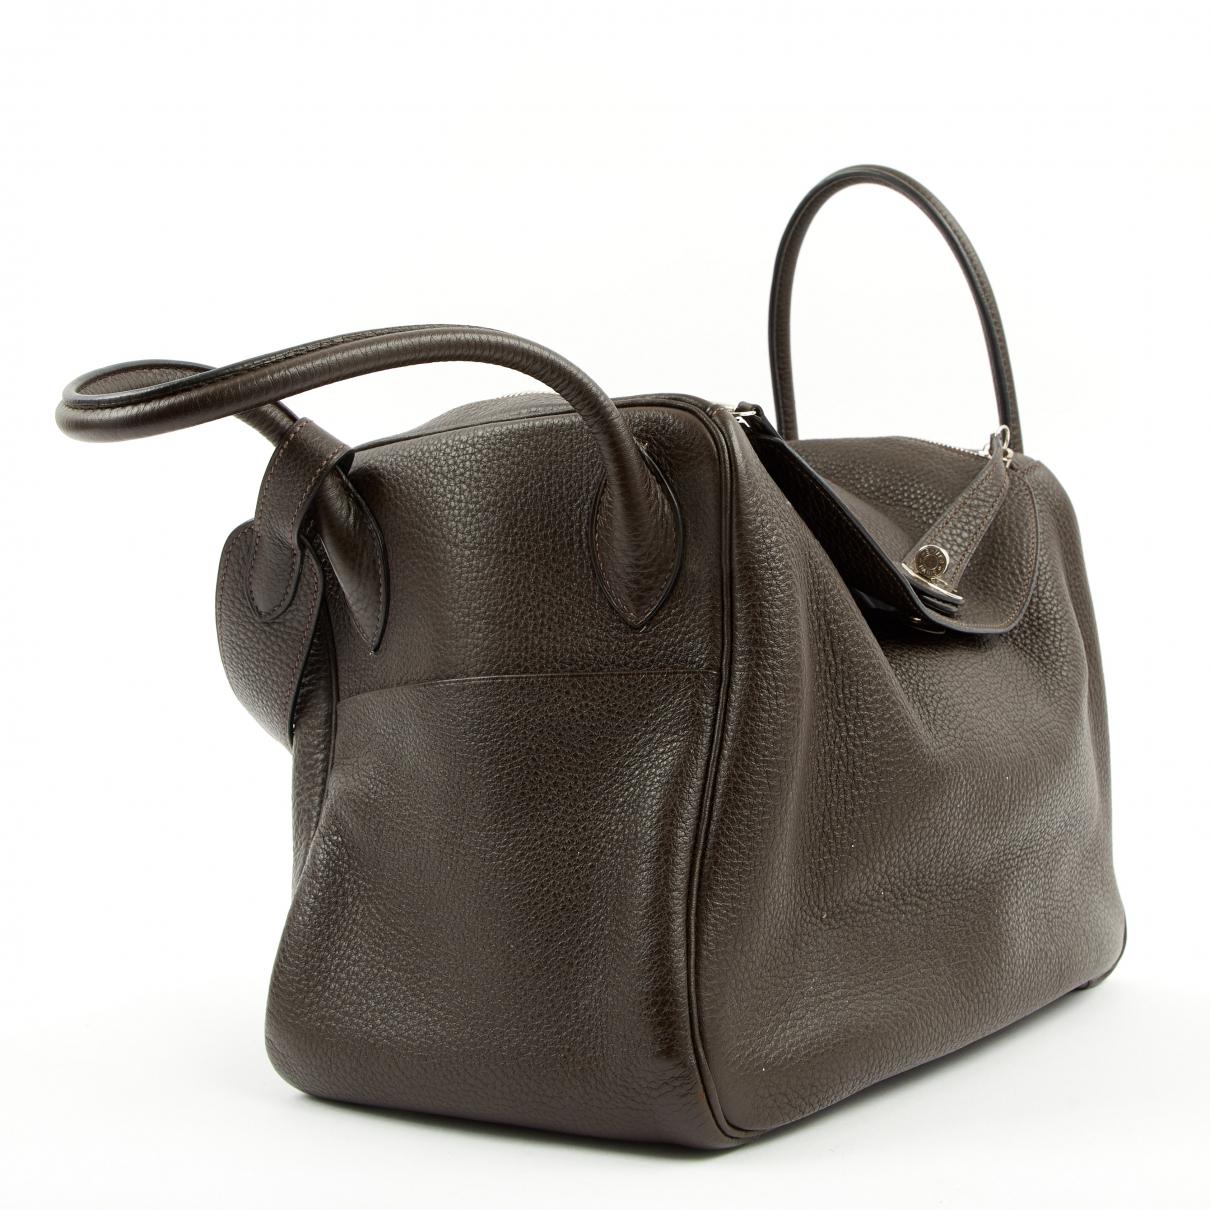 Hermès Lindy Leather Bag in Brown - Lyst